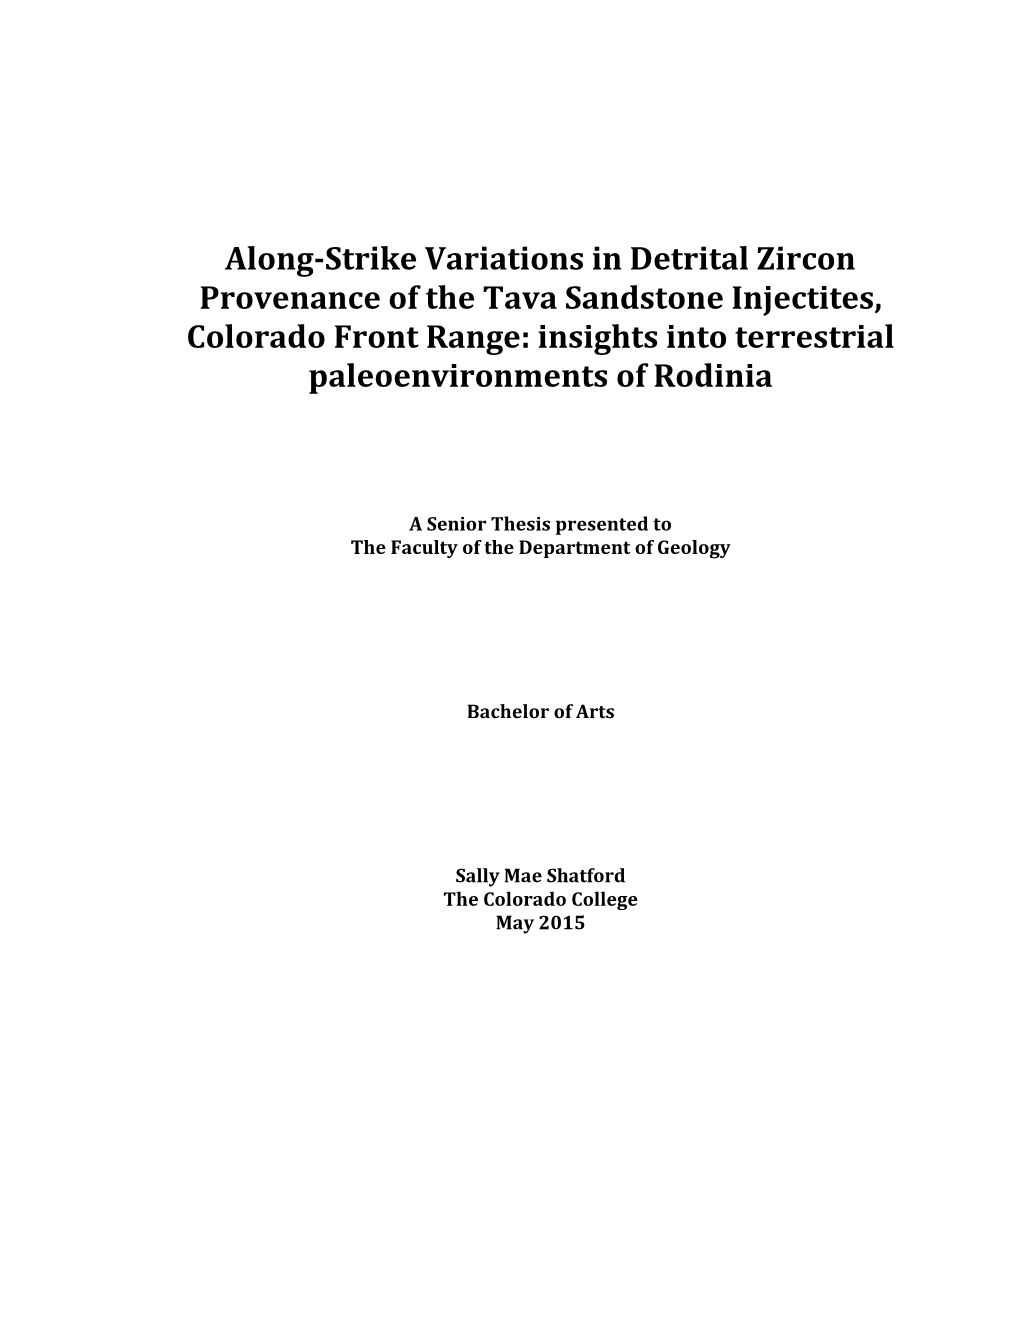 Along-Strike Variations in Detrital Zircon Provenance of the Tava Sandstone Injectites, Colorado Front Range: Insights Into Terrestrial Paleoenvironments of Rodinia